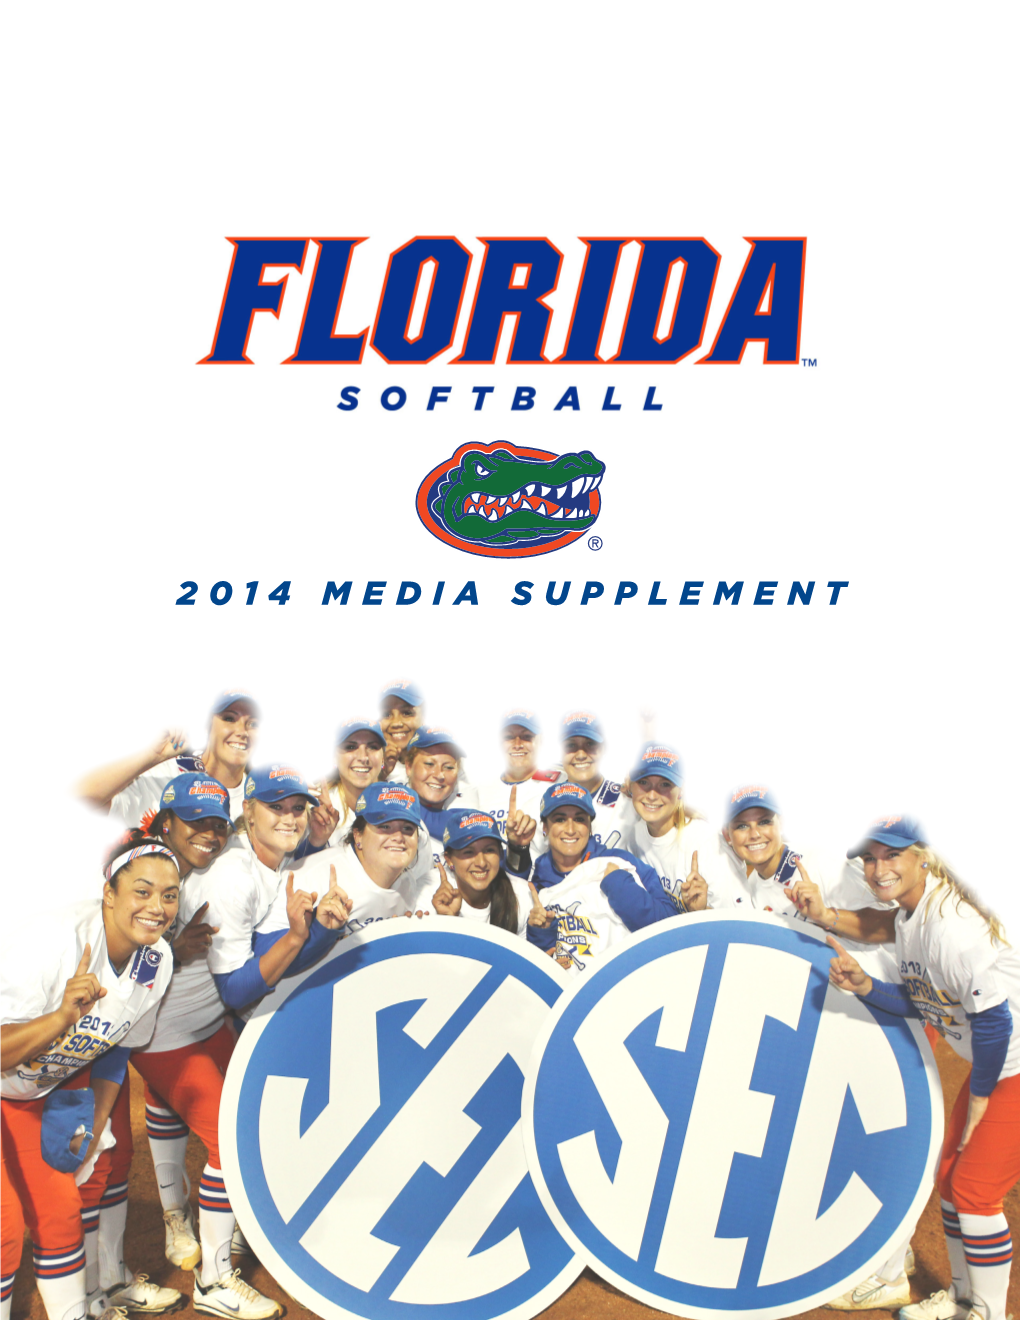 2014 Media Supplement Florida Softball 2014 Media Supplement